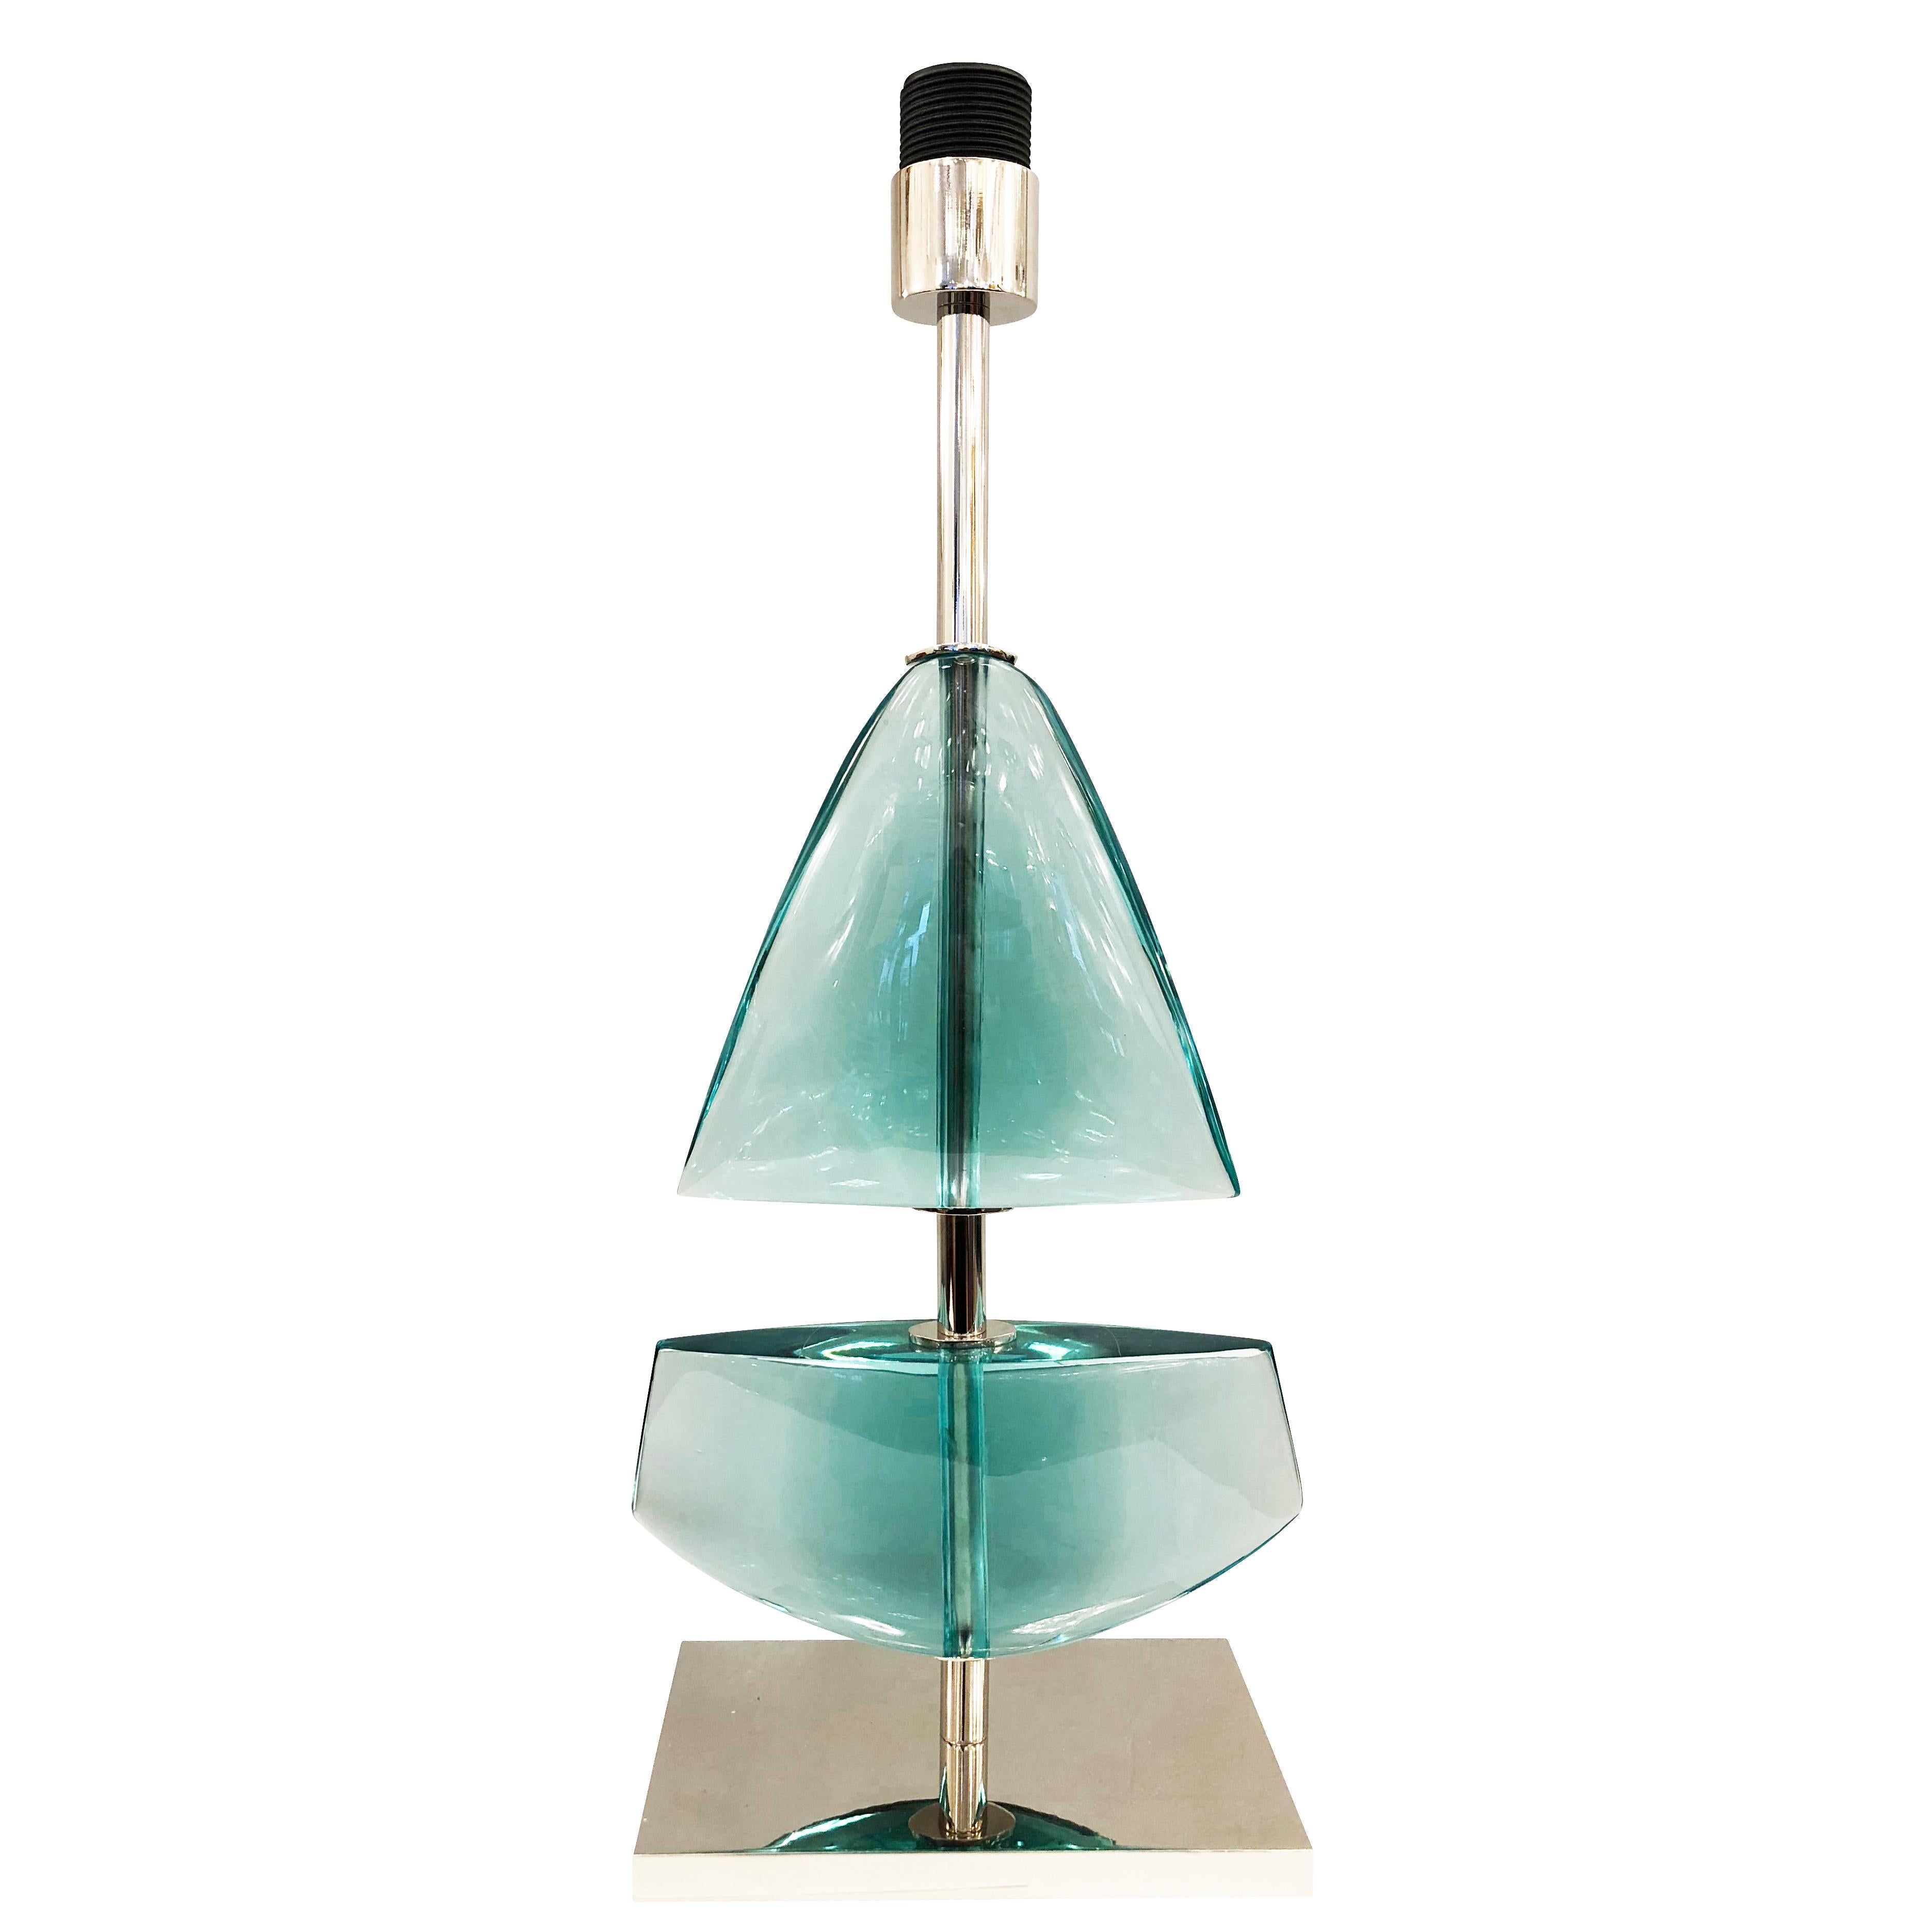 Modern Vela Table Lamp by Effetto Vetro for Gaspare Asaro